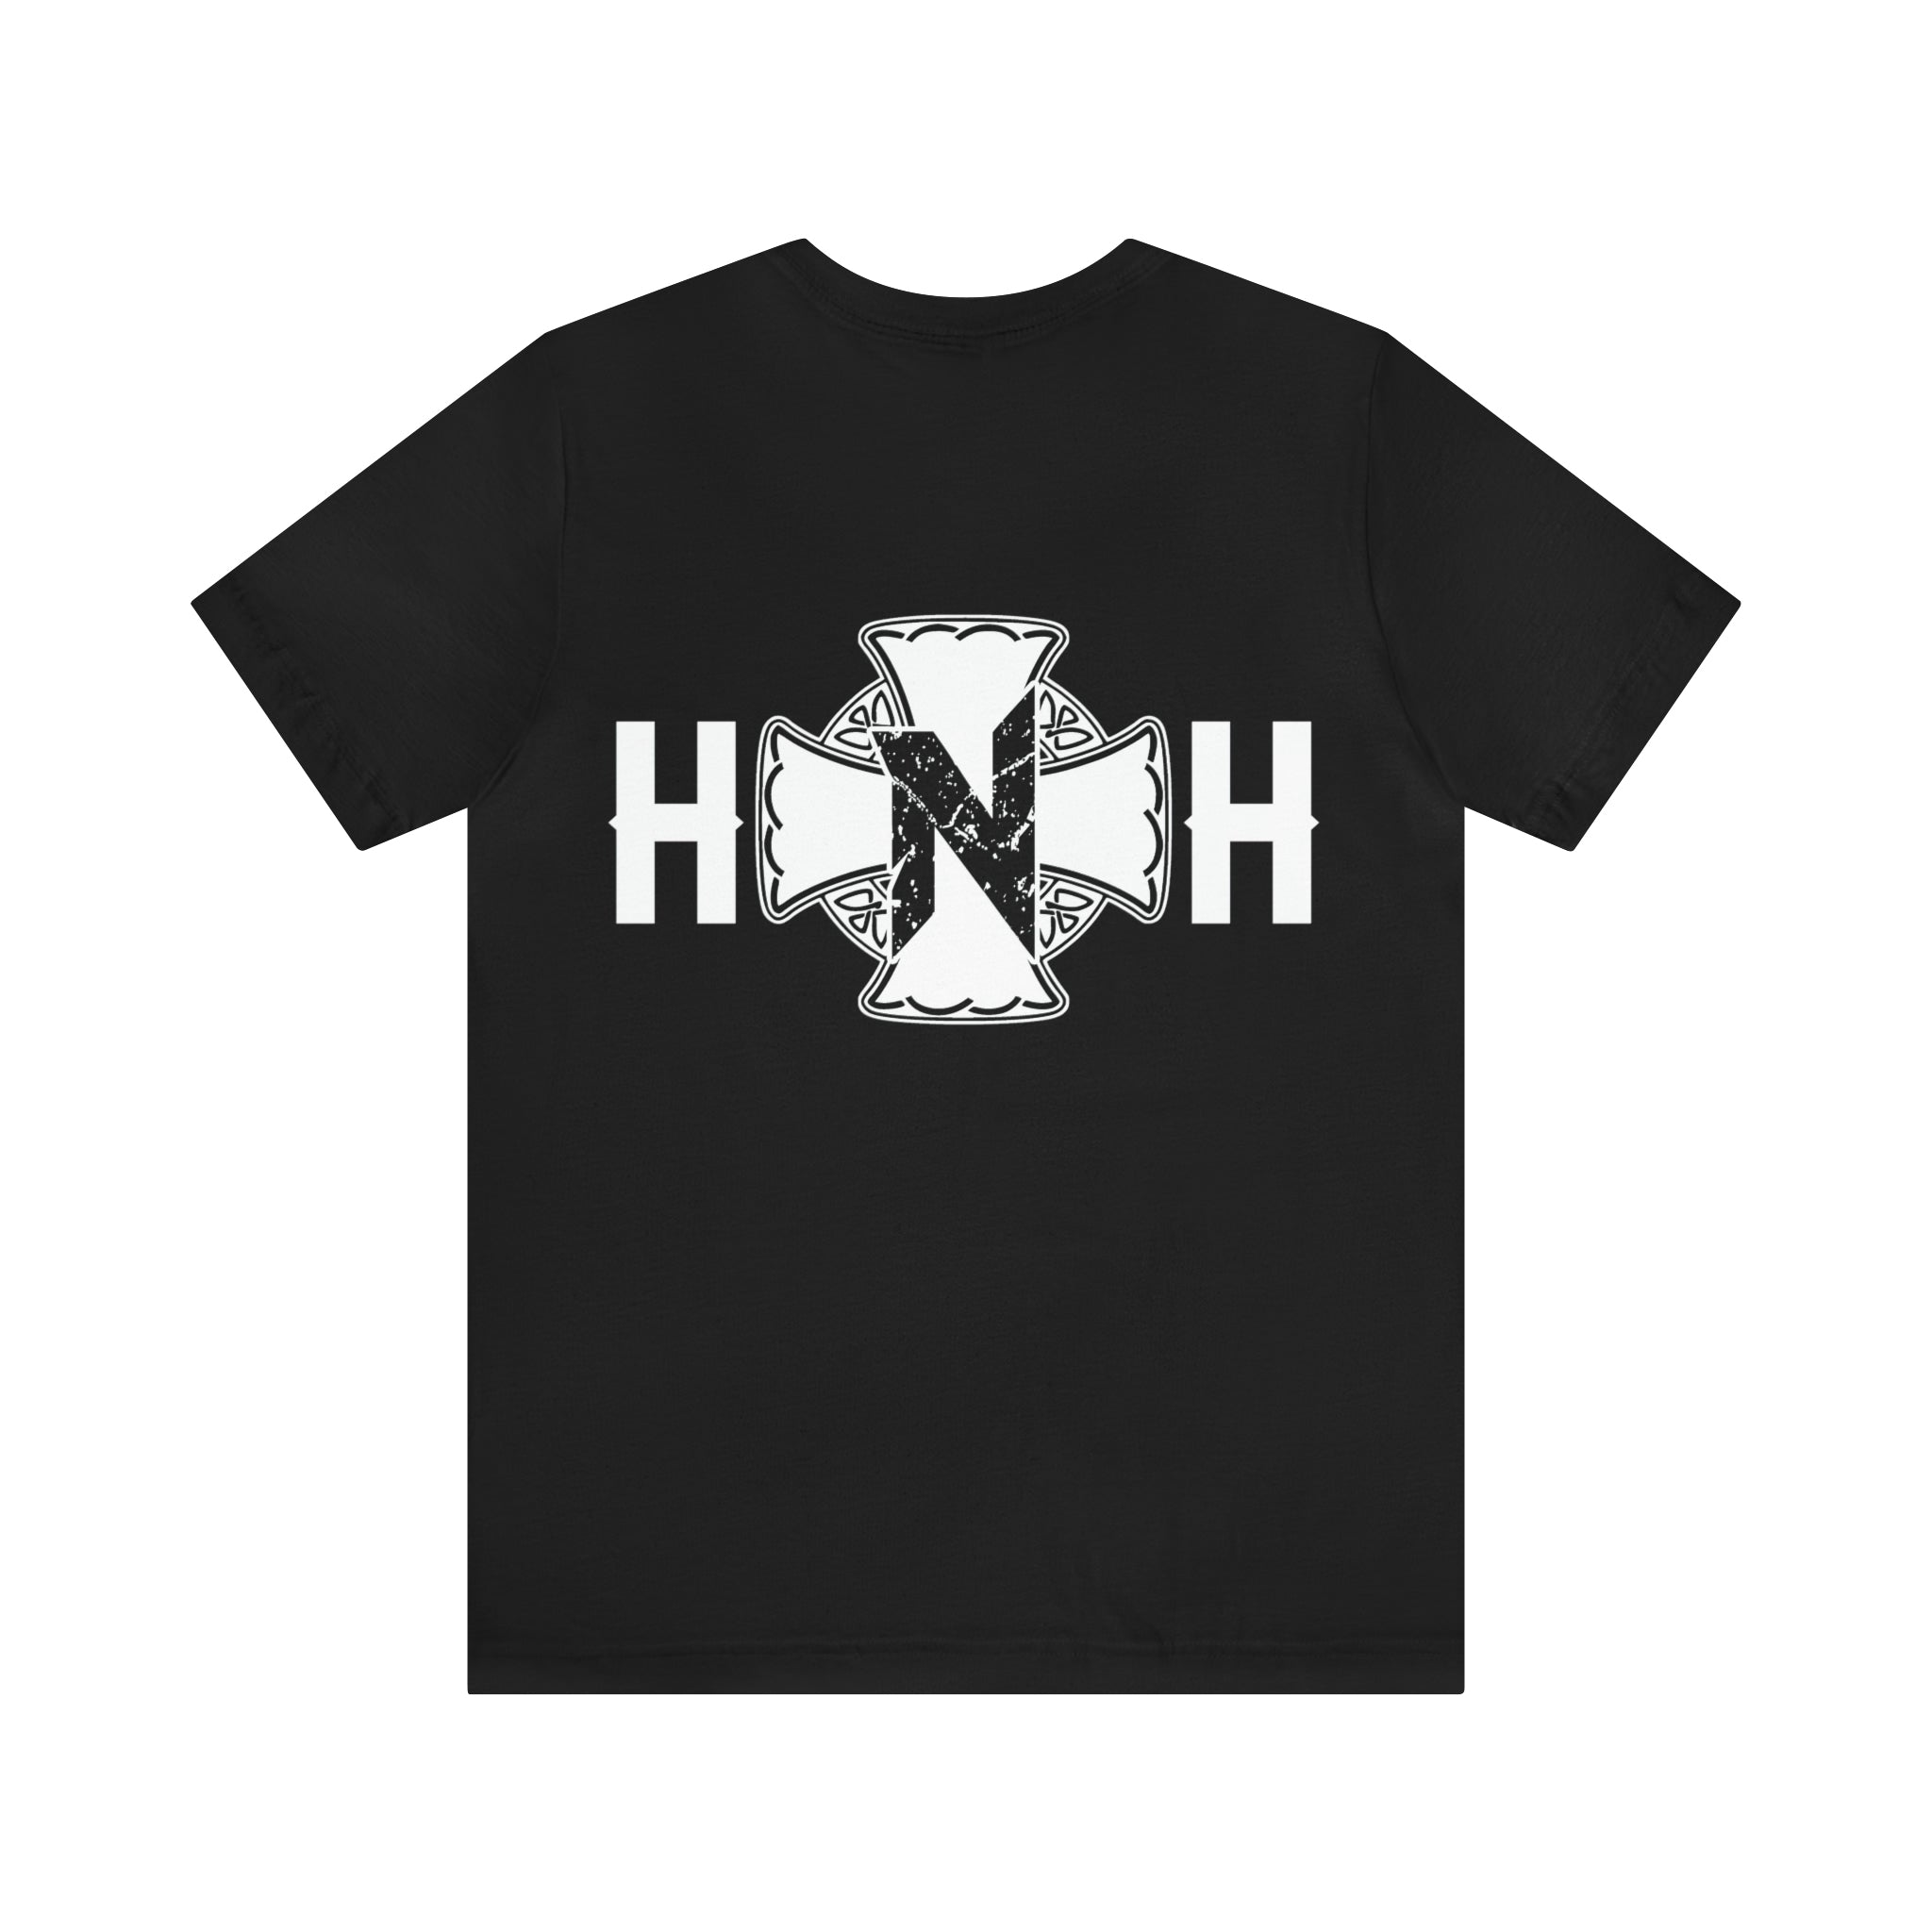 HARD'N'HEAVY Jersey Short Sleeve Tee for Men / Alternative Fashion Outfits - HARD'N'HEAVY